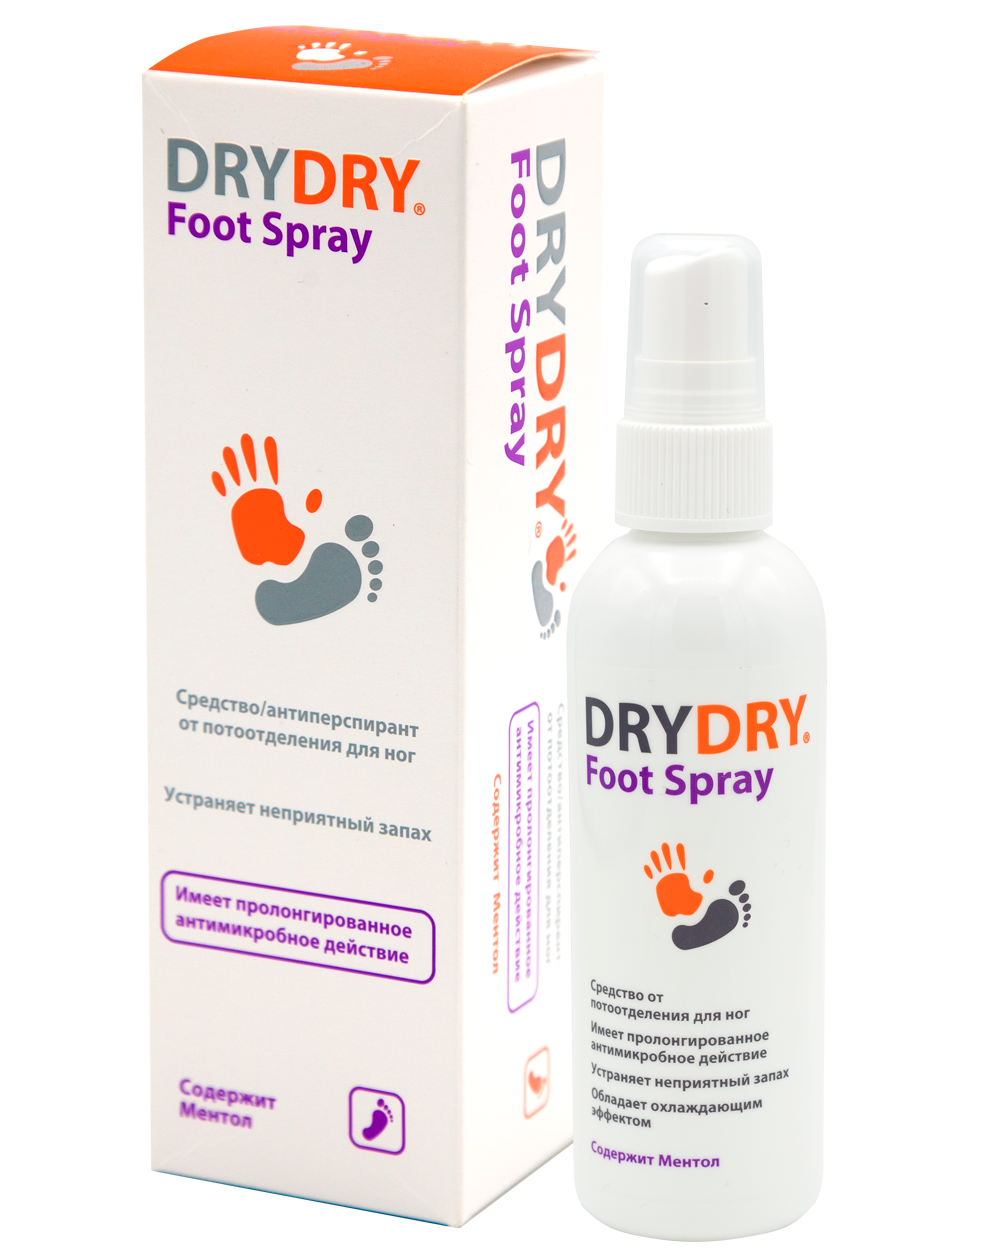 Dry Dry foot Spray. Драй-драй дезодорант для ног. Драй драй фут 100мл спрей. Dry ru спрей для ног 100 мл 2 штуки.